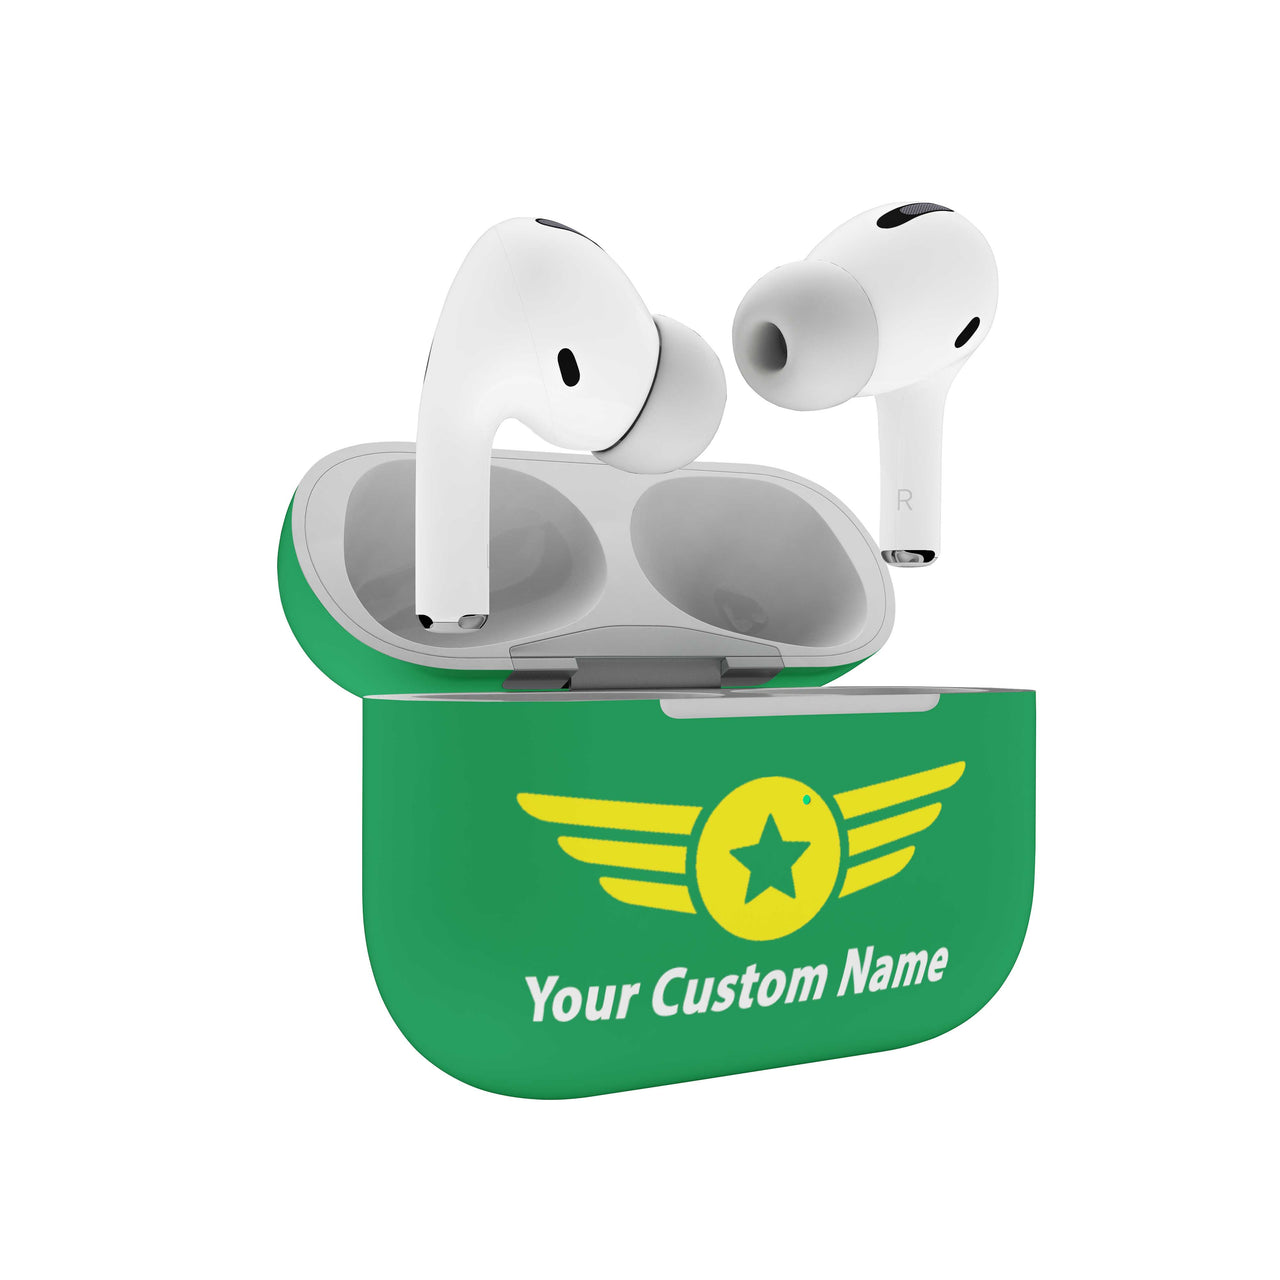 Custom Name (Badge 4) Designed Airpods "Pro" Cases